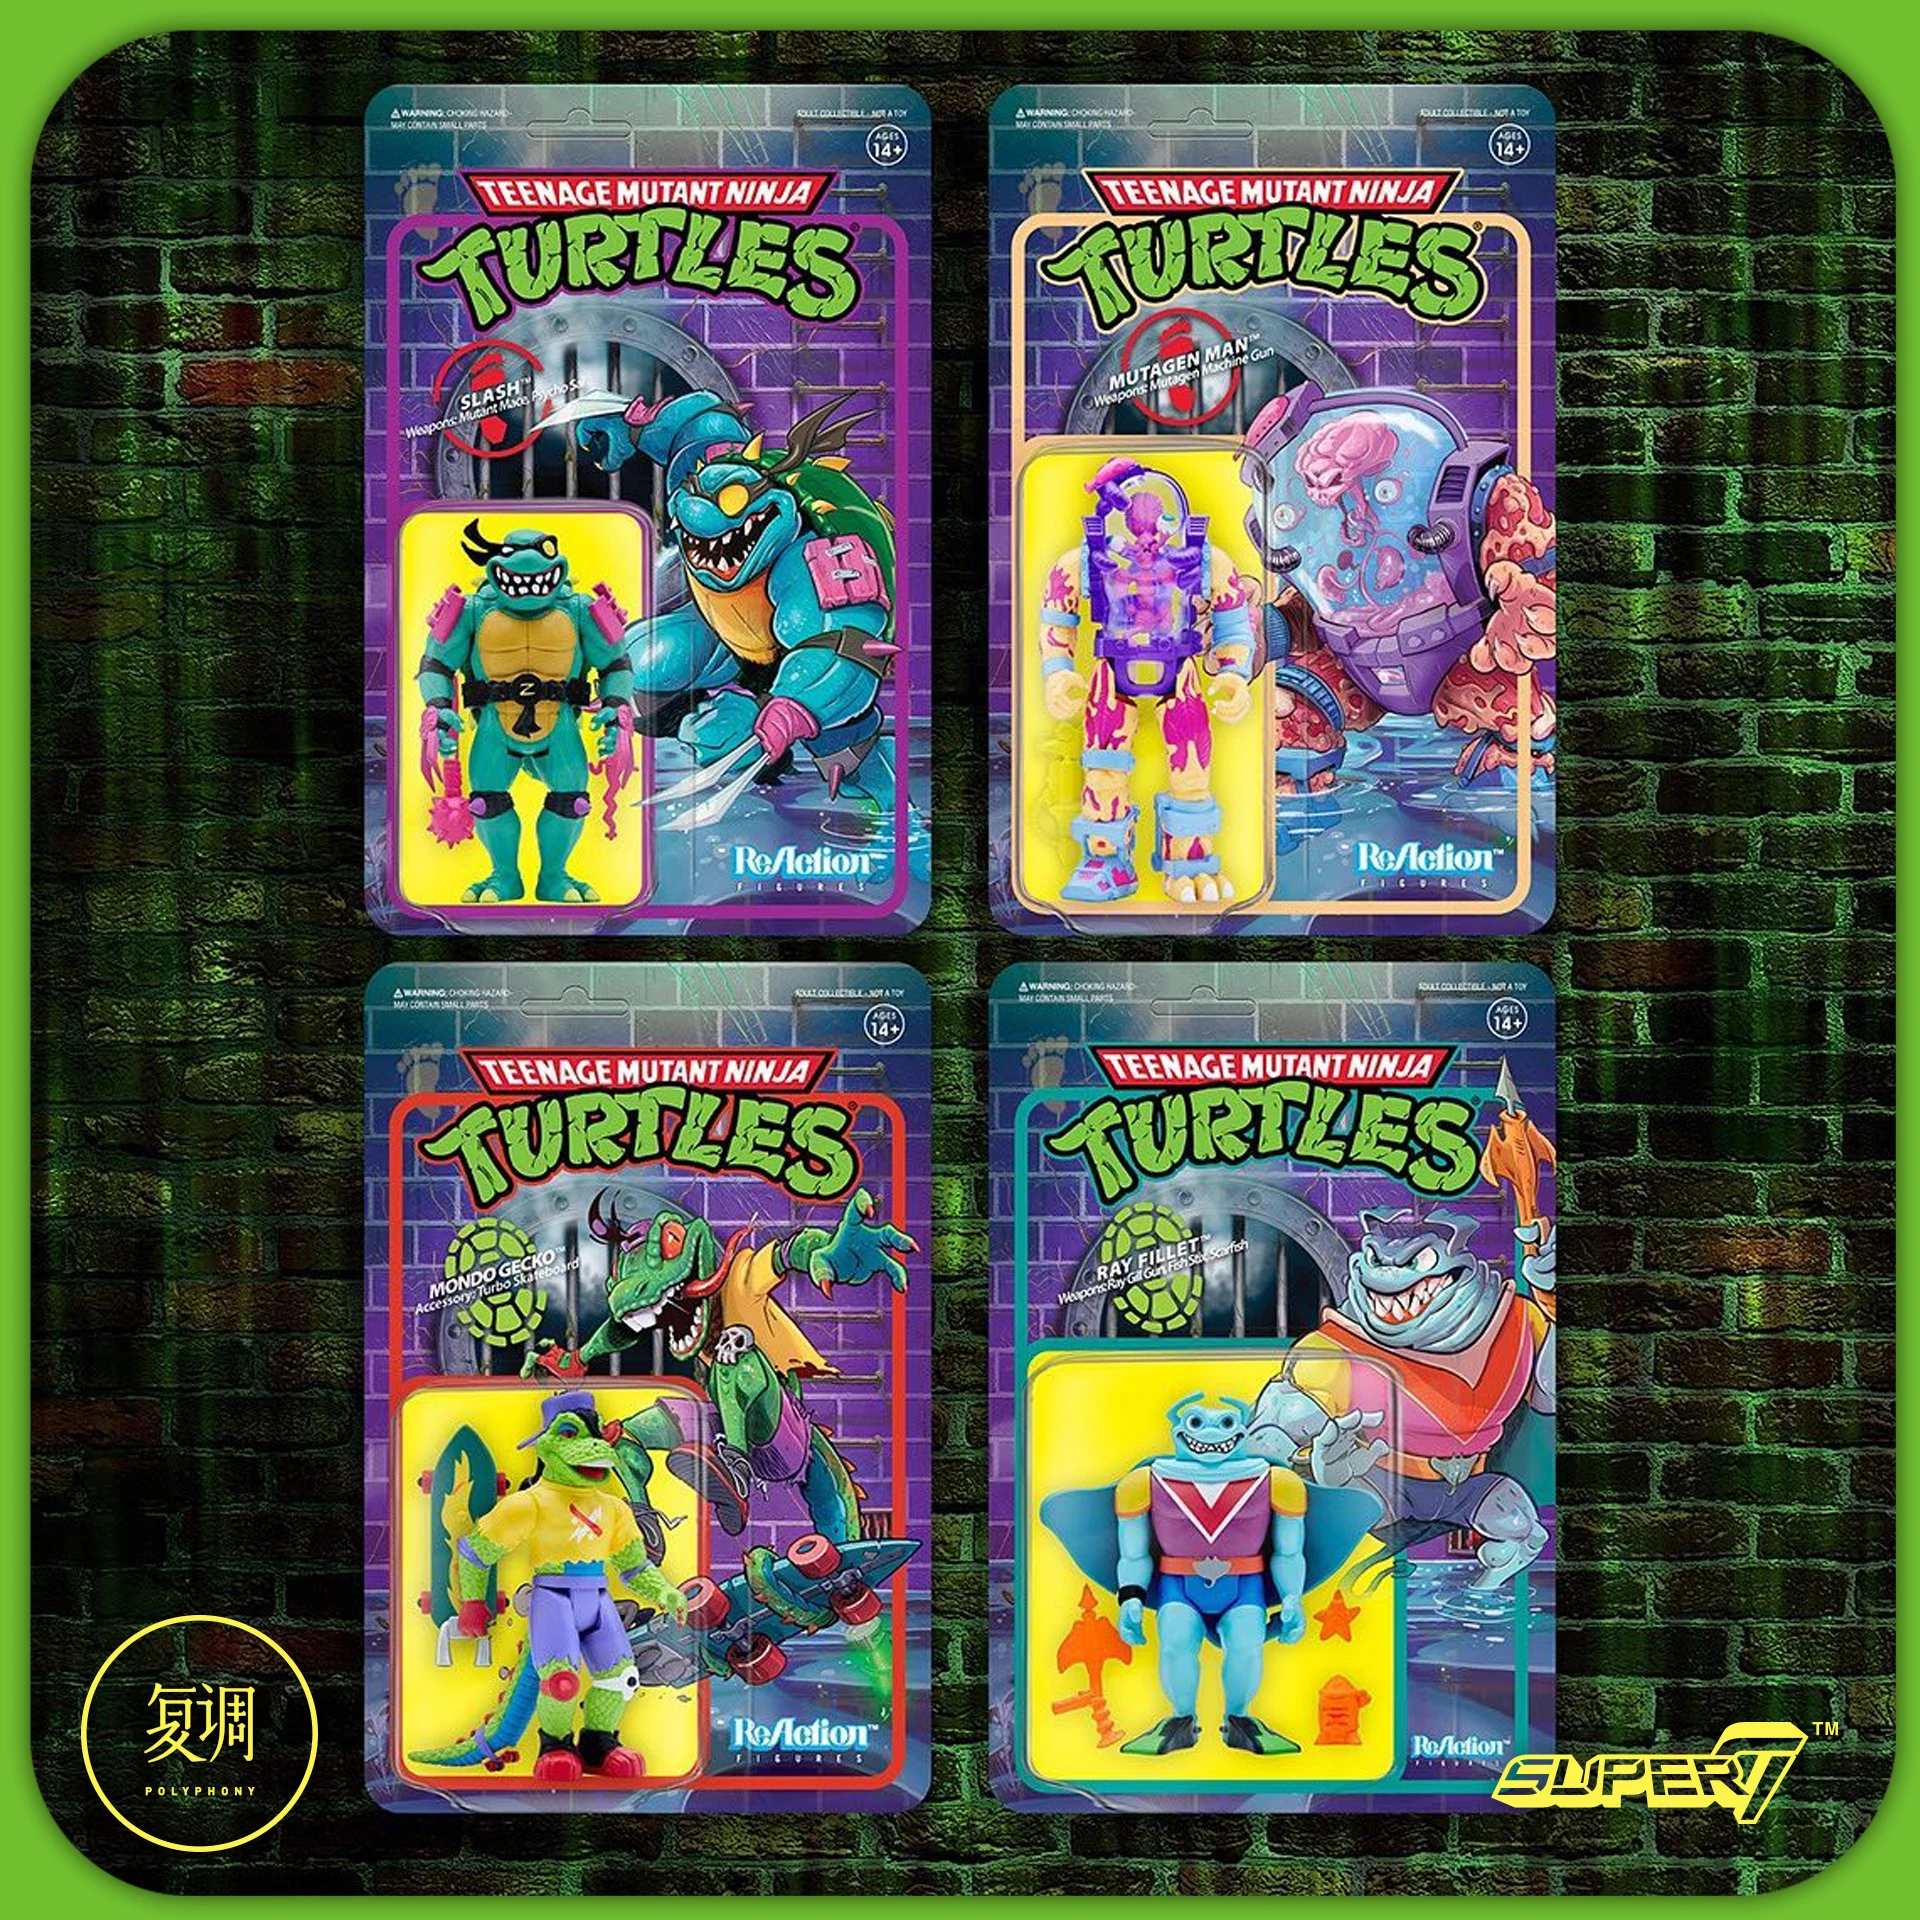 

In Stock Original Super7 Teenage Mutant Ninja Turtles Reaction Figure SLASH RAY FILLET 3.75 Inch Action Figure Collection Model